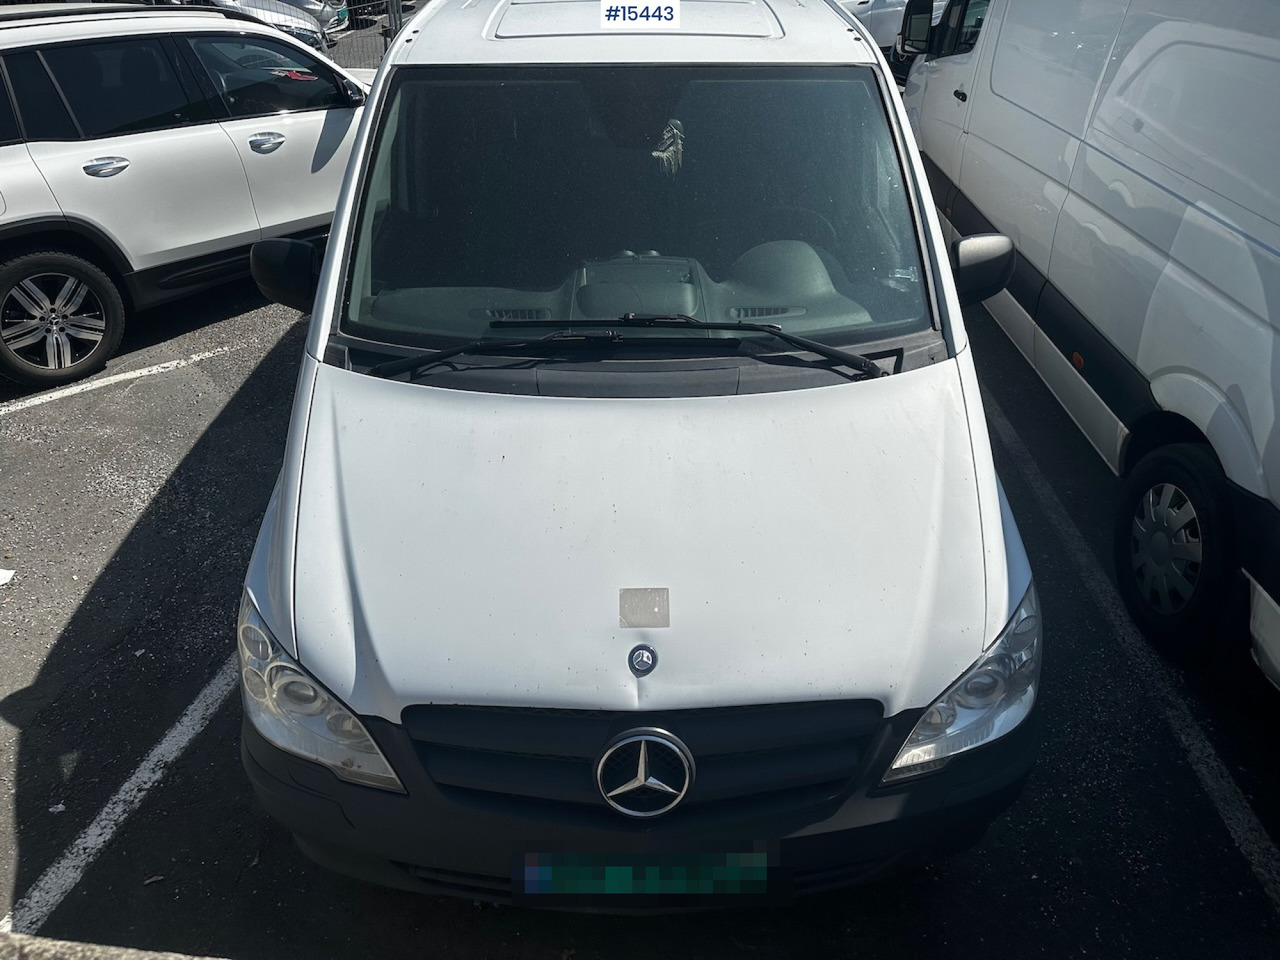 Mercedes vito 316CDI - Panel van: picture 3